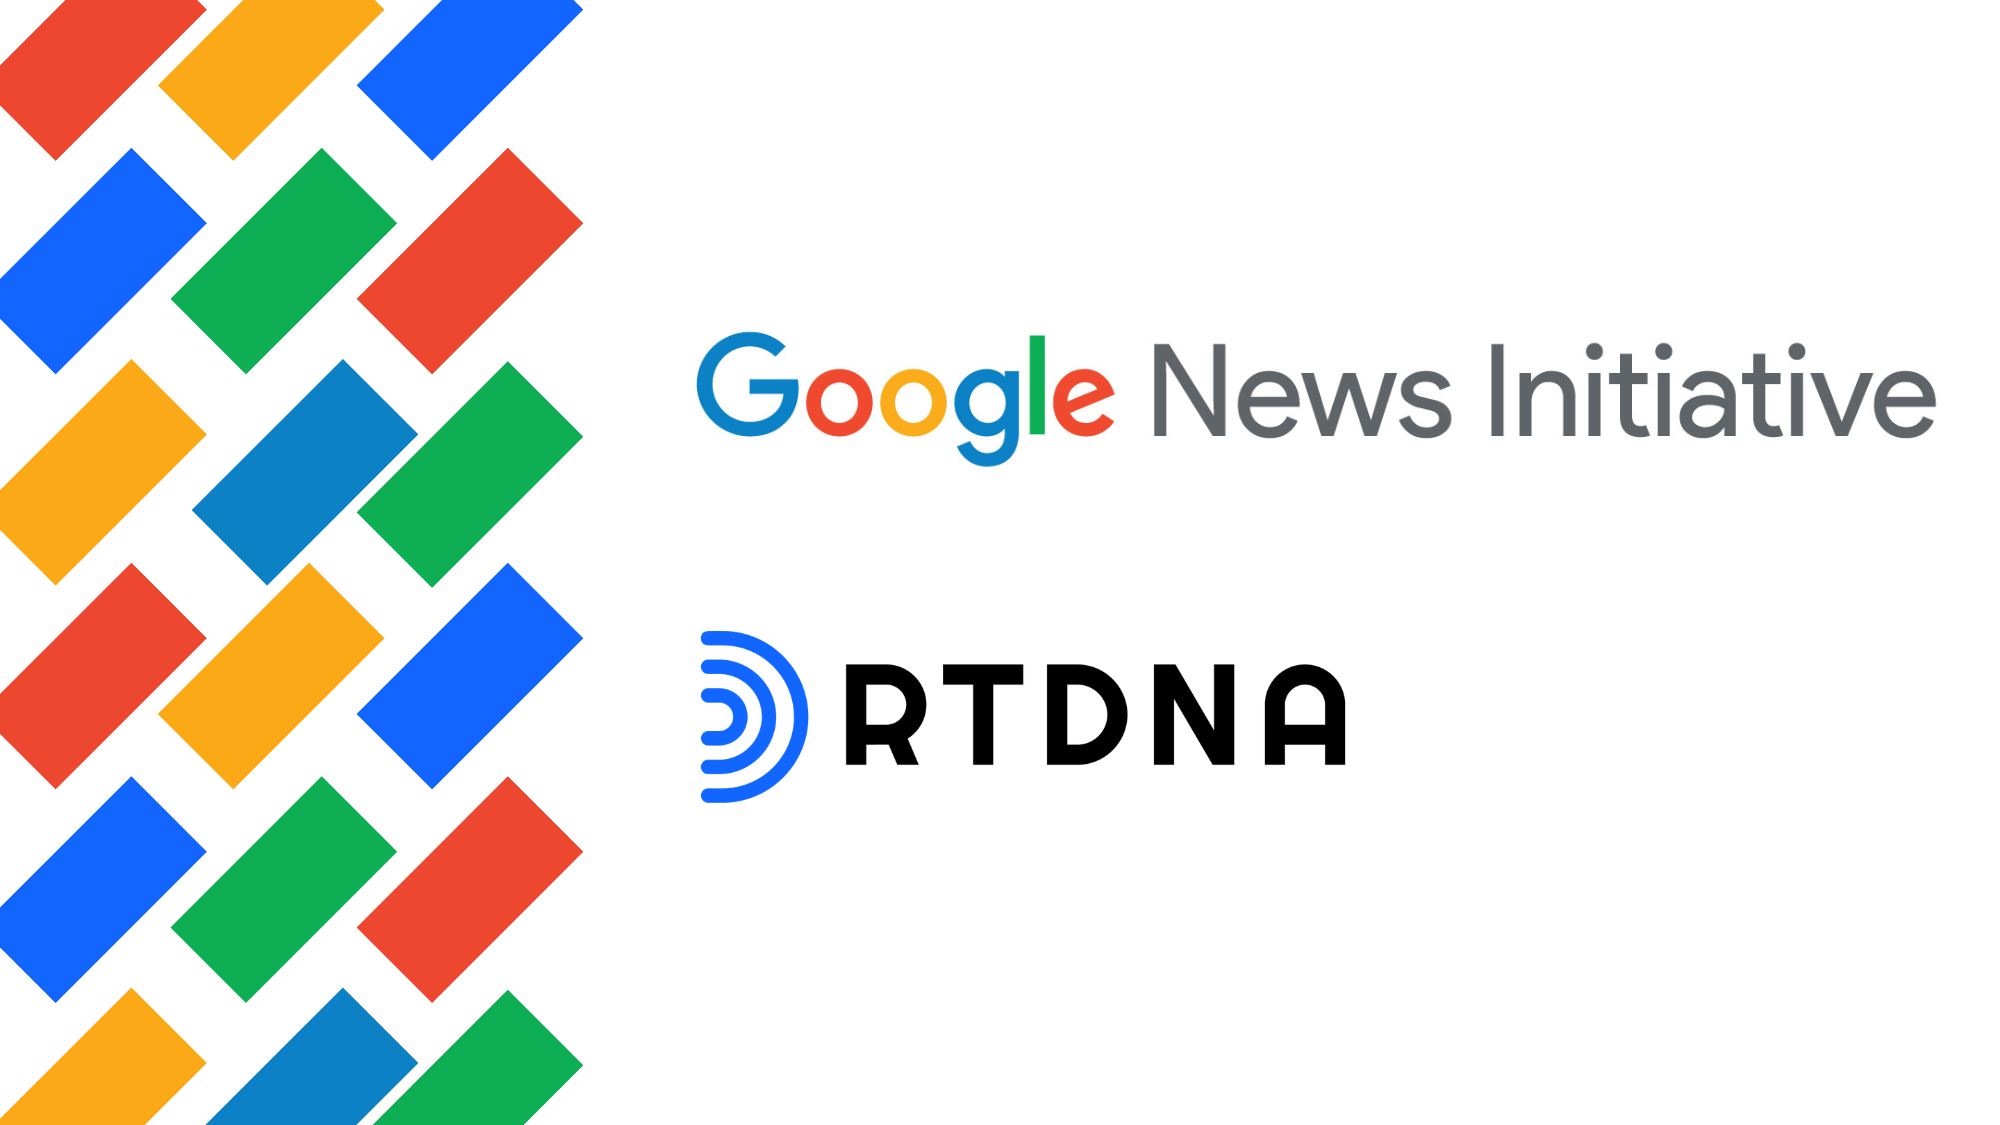 Google News/RTDNA logo